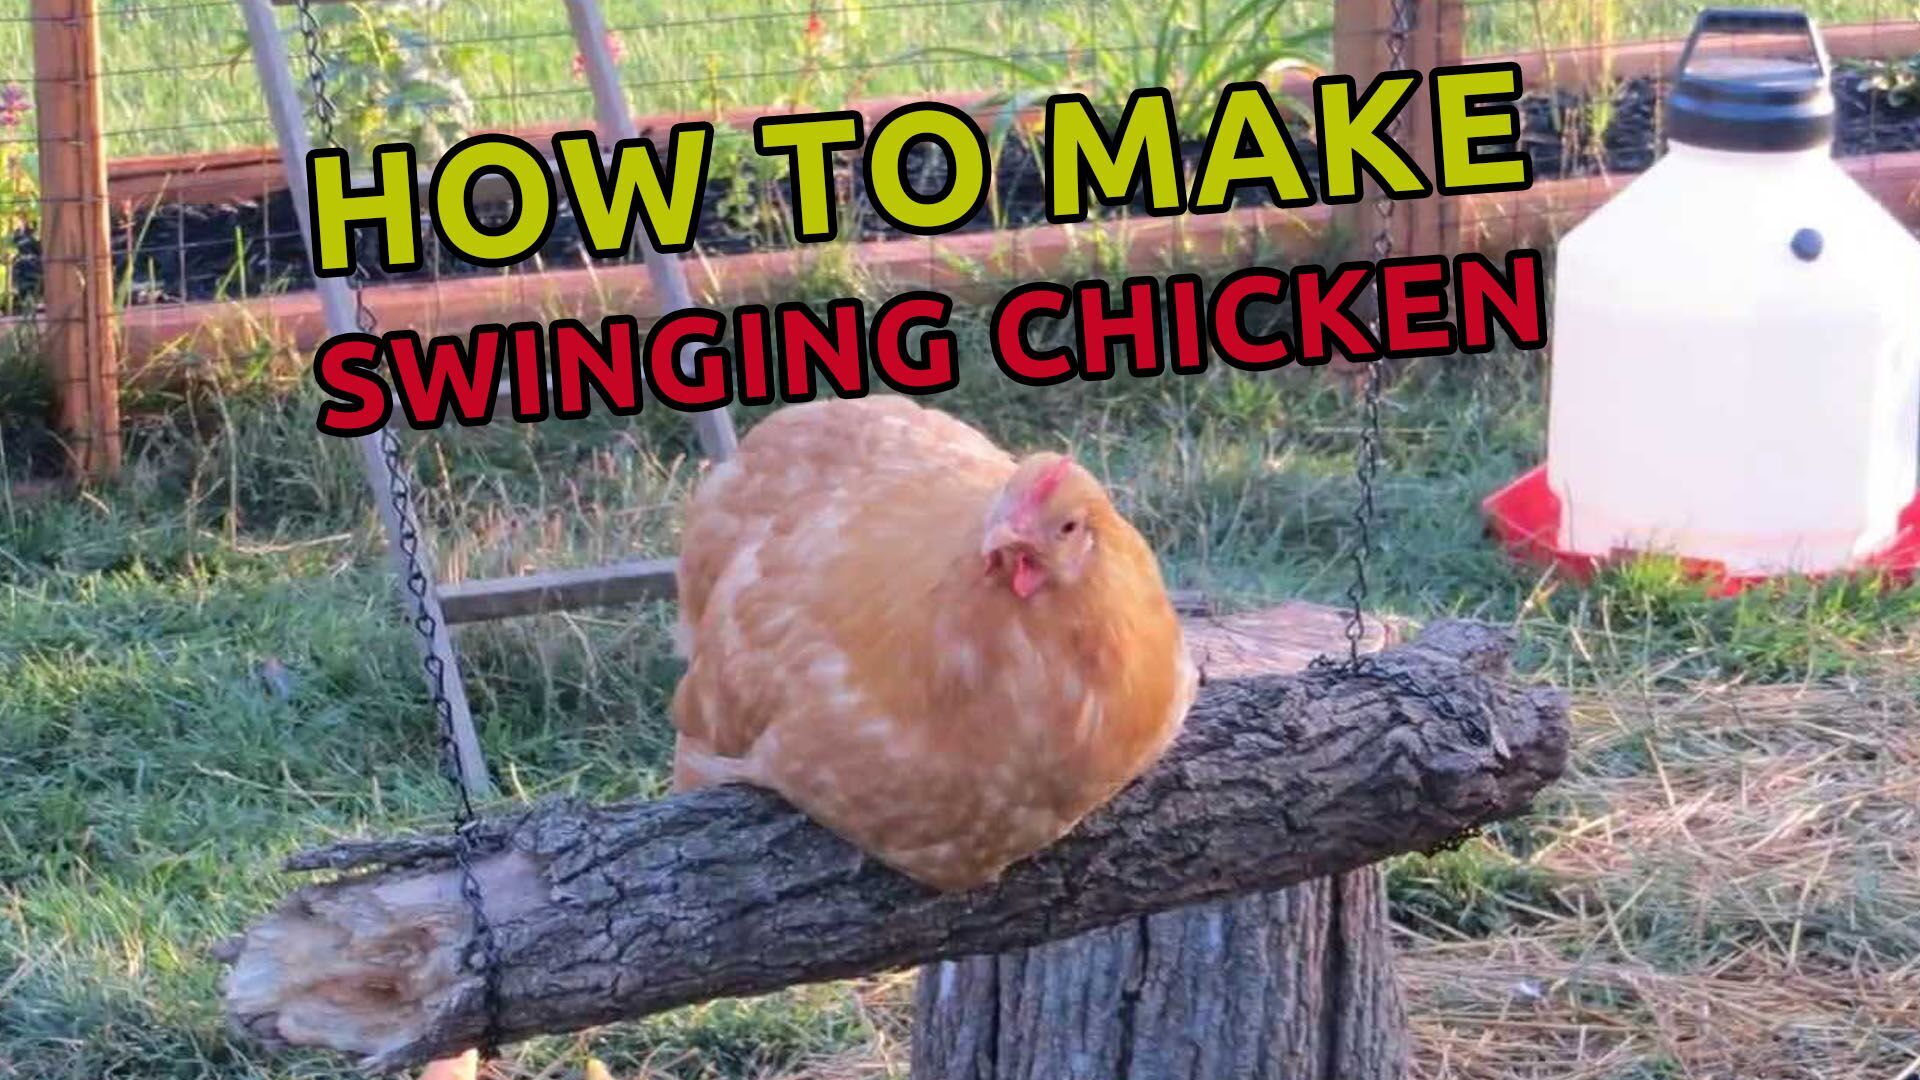 How to Make Swinging Chicken